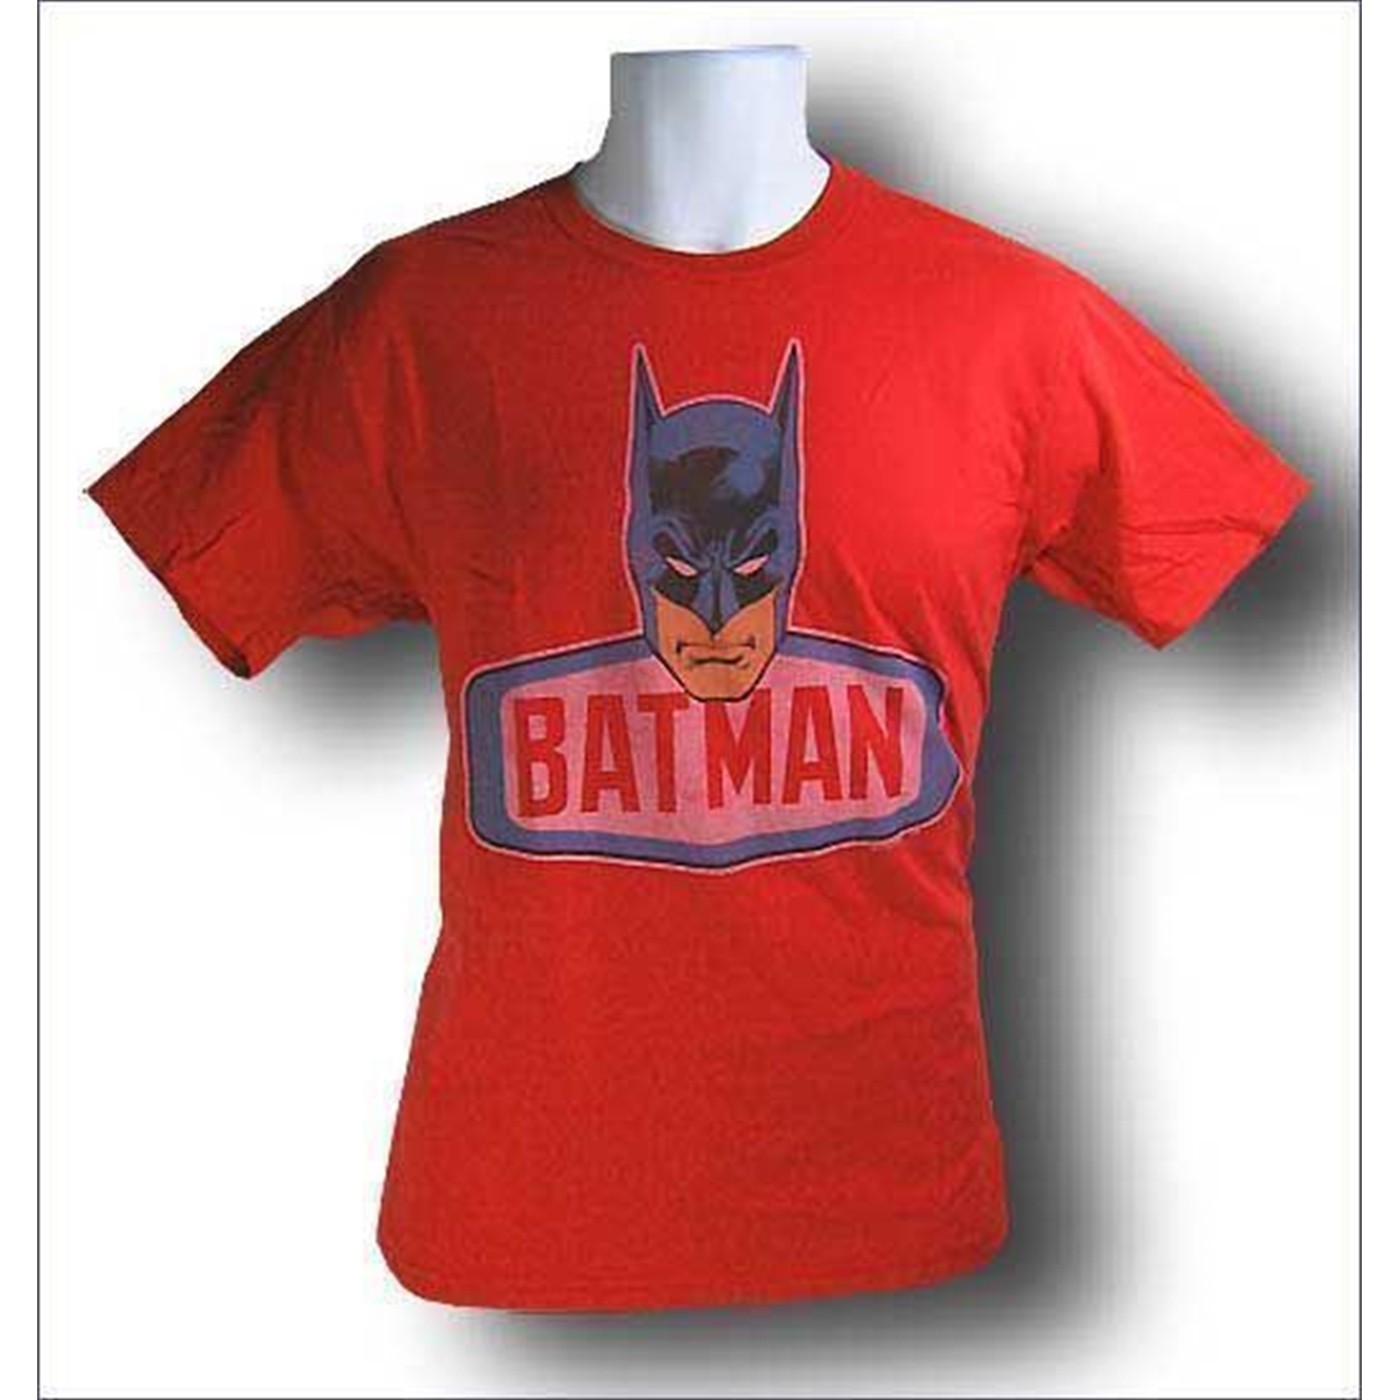 Batman Head Licorice T-Shirt by Junk Food